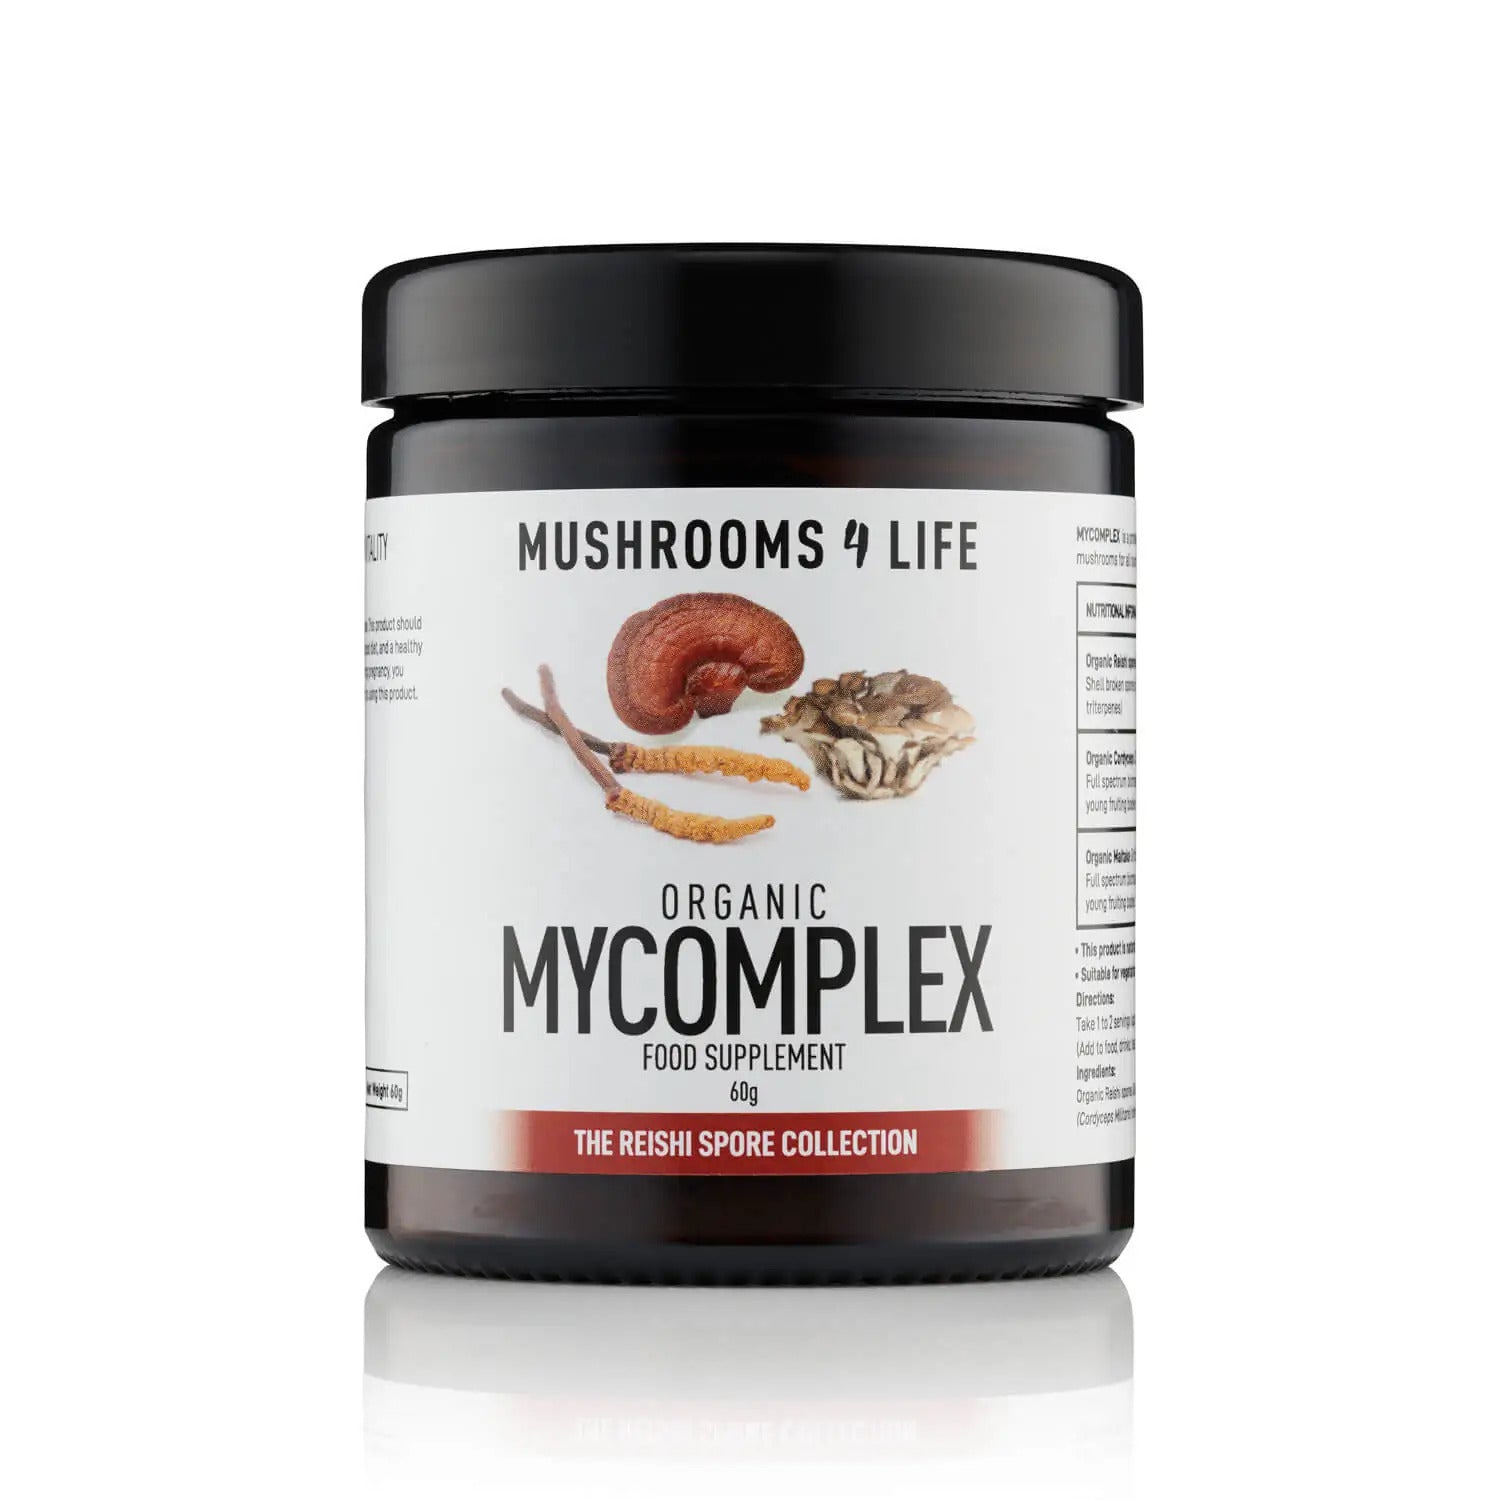 Mushroom4life MyComplex - When Nature Calls